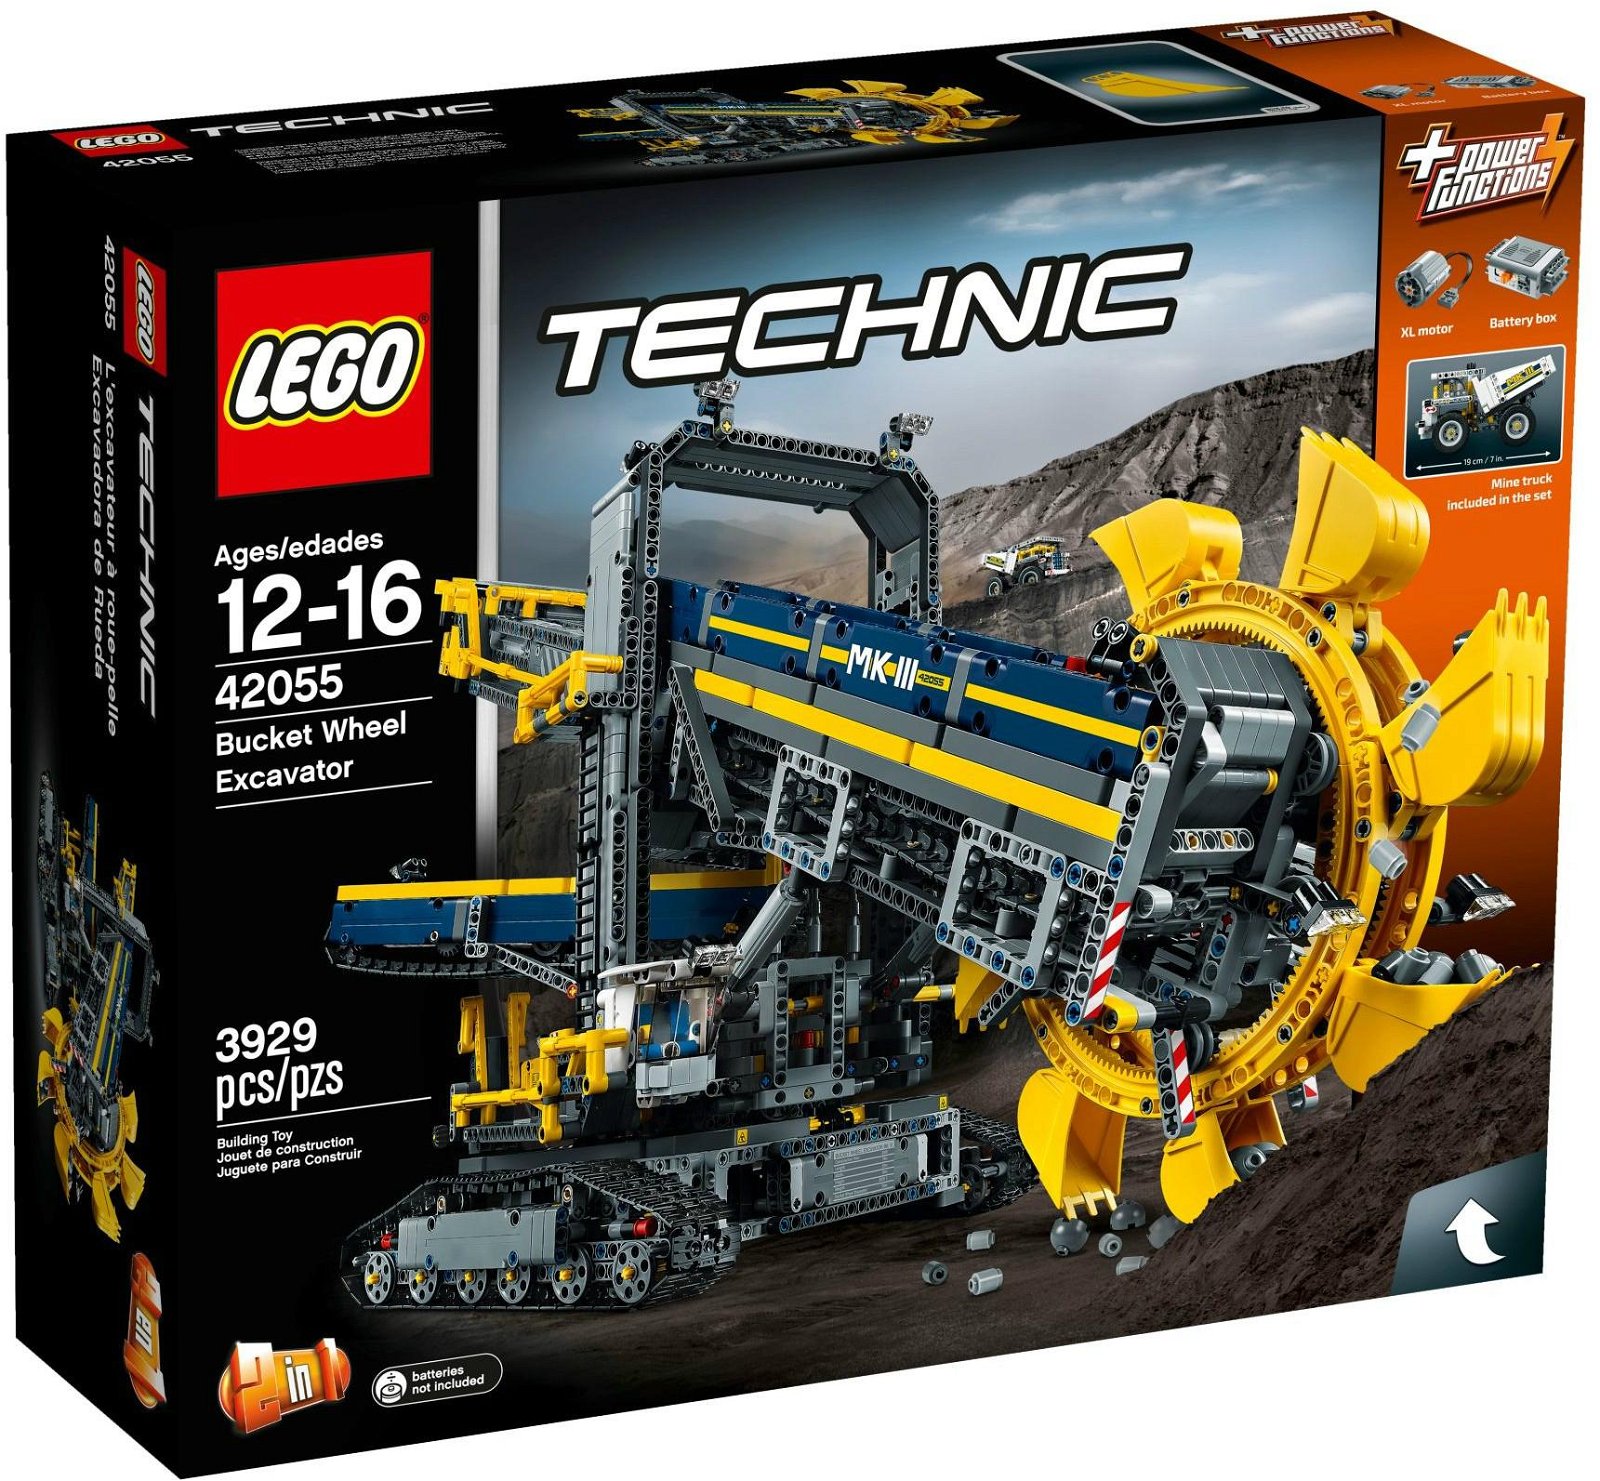 LEGO Technic 42055 Bucket Wheel Excavator Building Kit